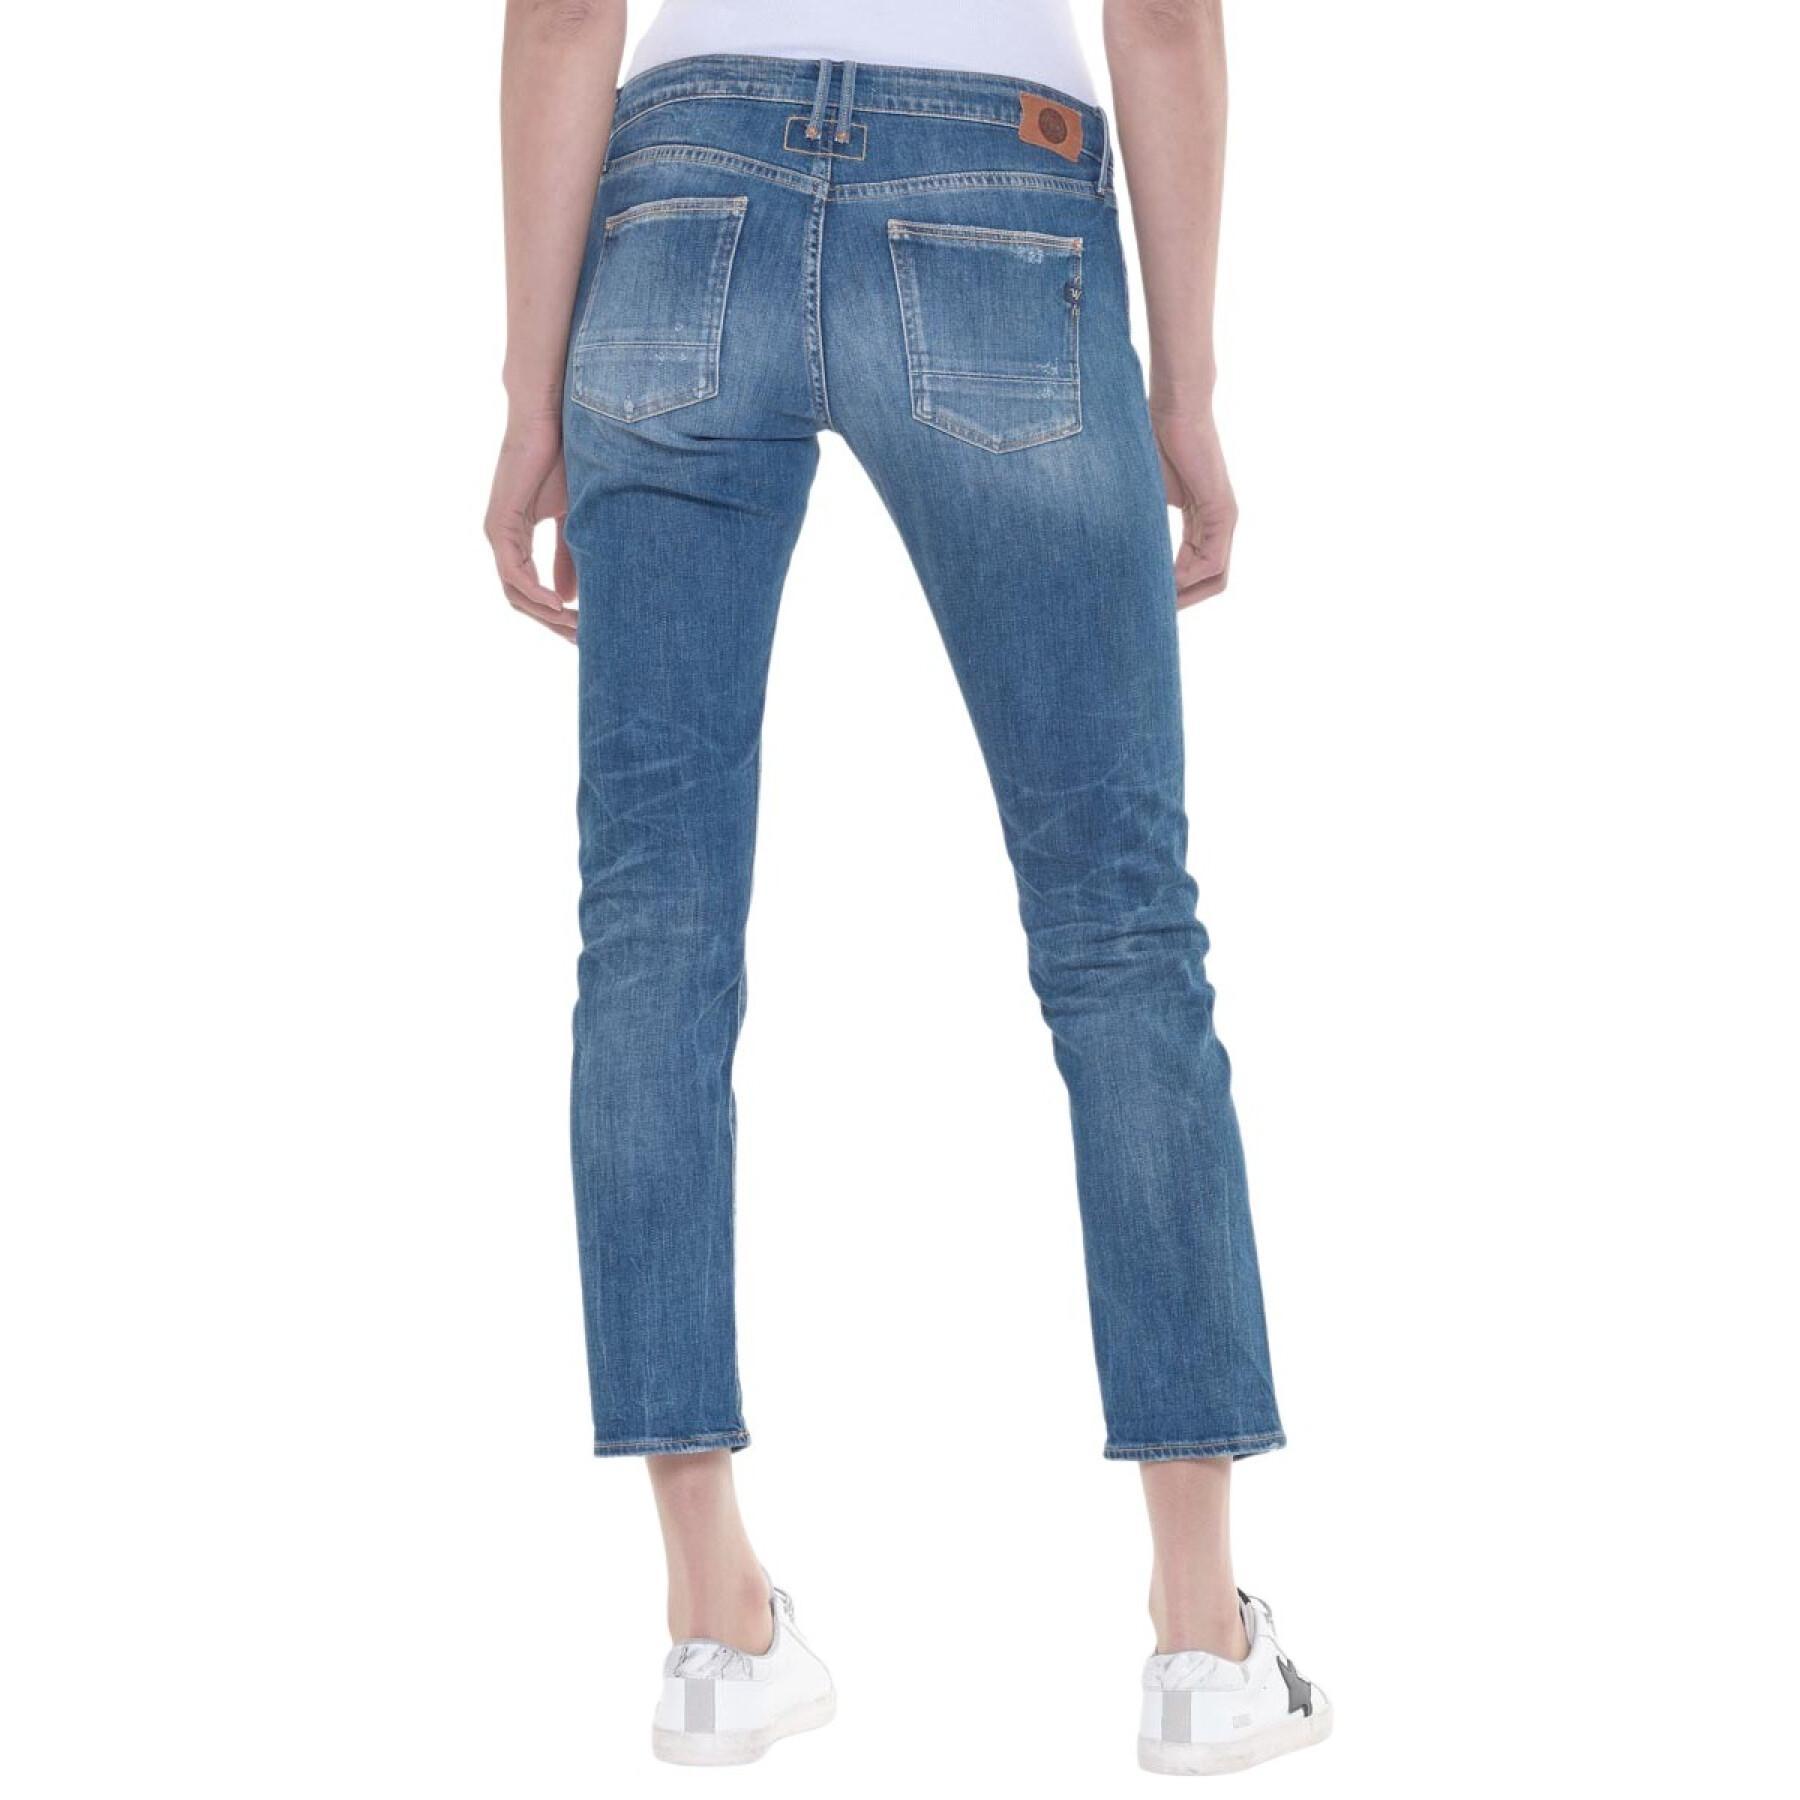 Boyfit-jeans för kvinnor Le temps des cerises Sea 200/43